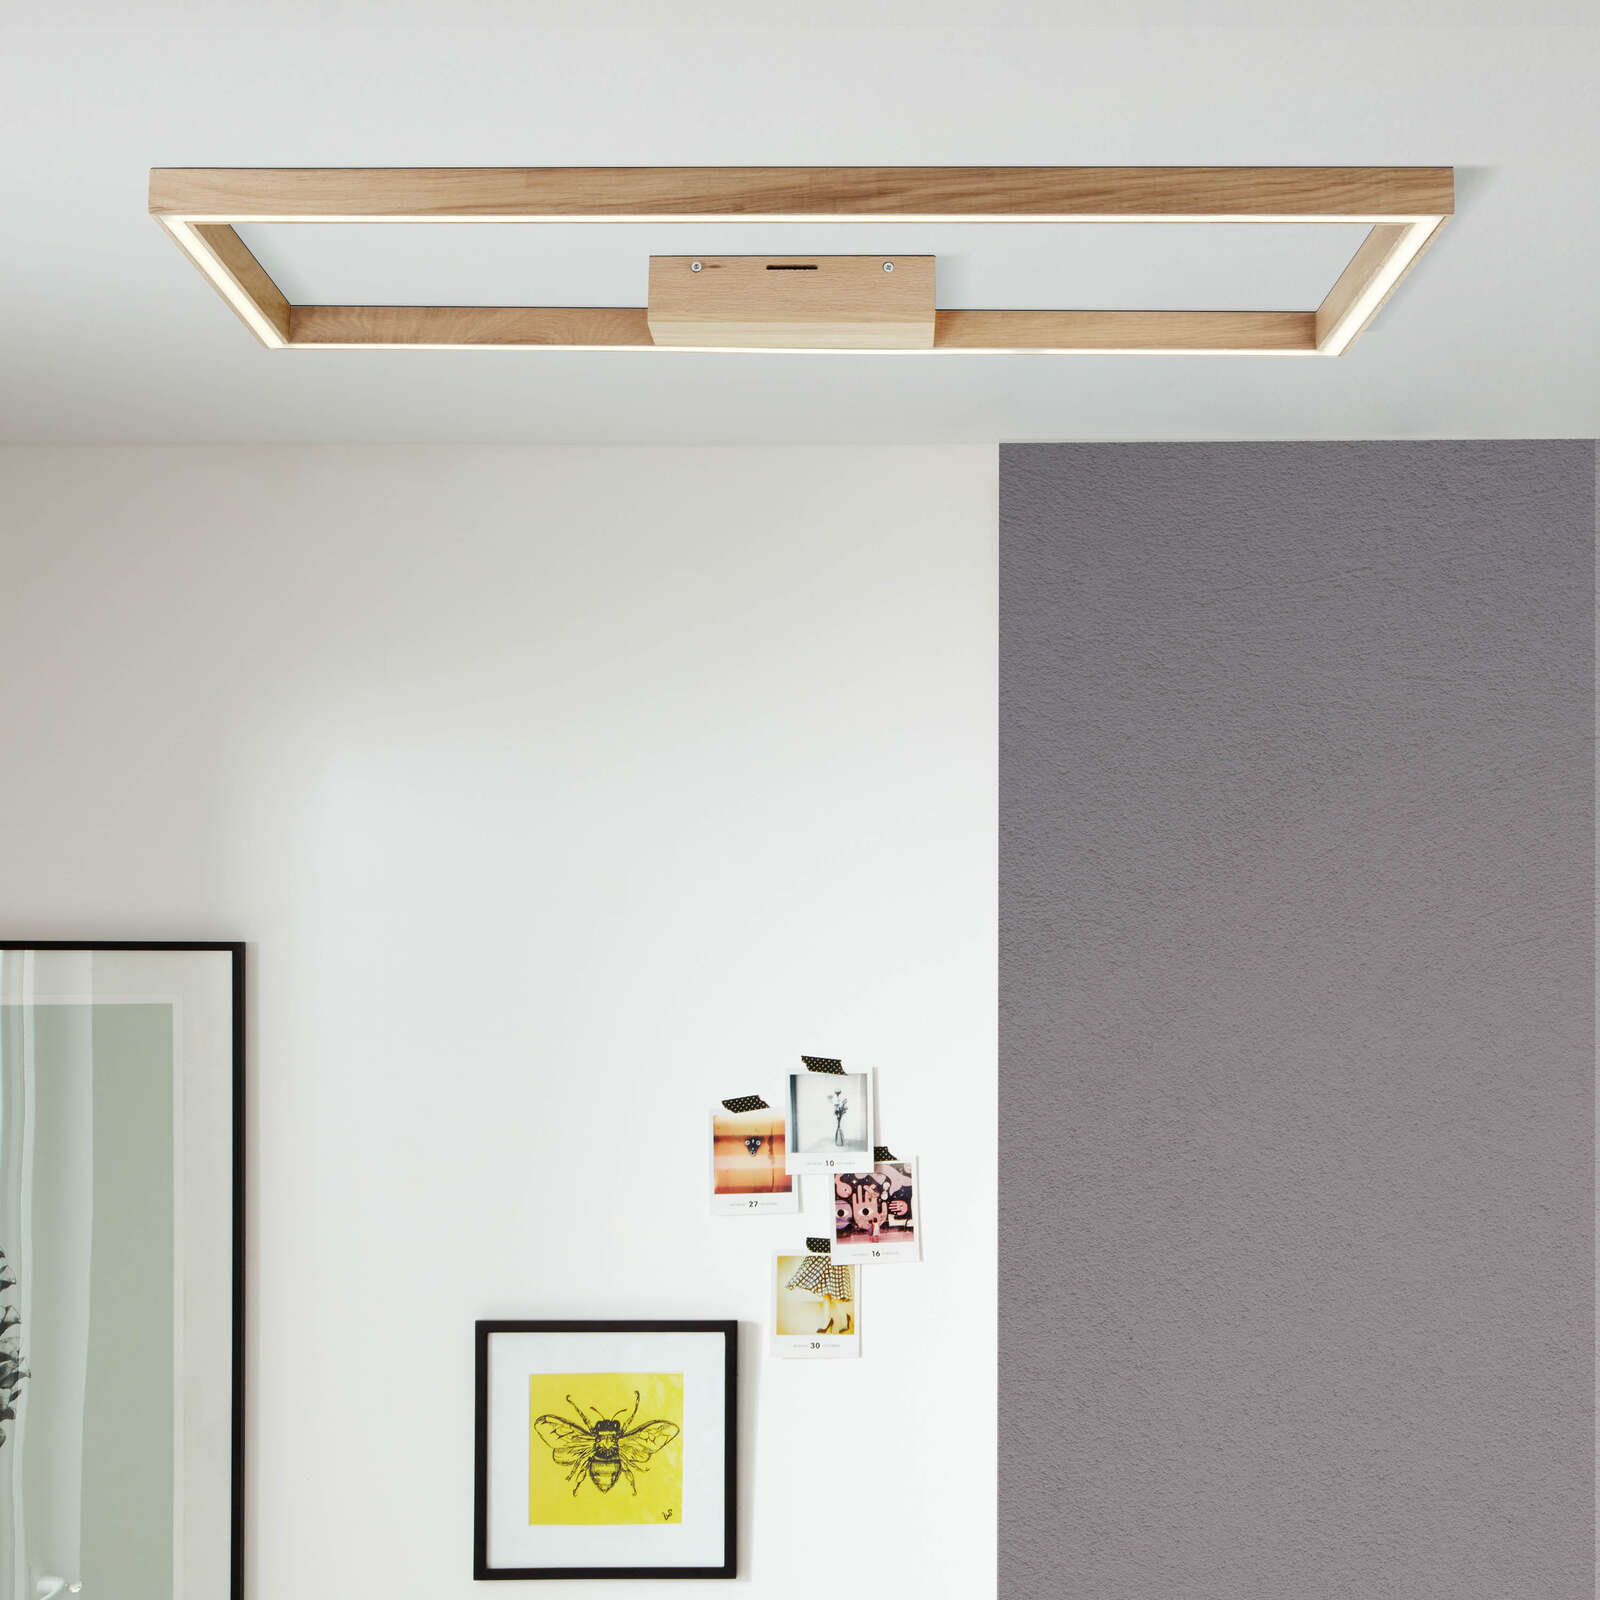             Wooden ceiling light - Eveline - Brown
        